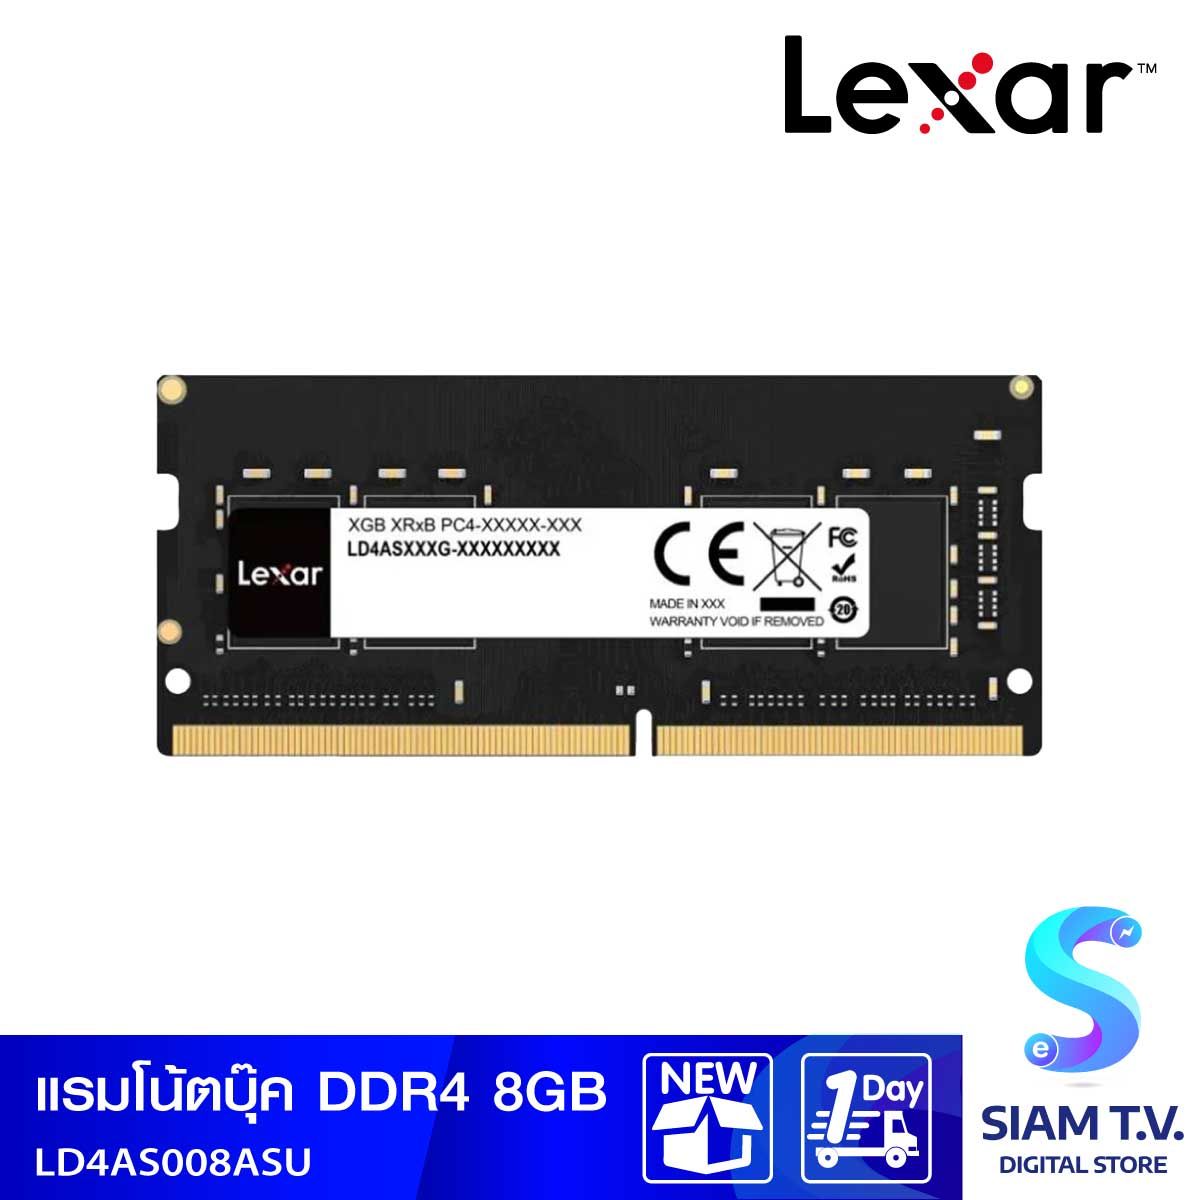 LEXAR DDR4-3200/2666 SODIMM LAPTOP MEMORY 8GB